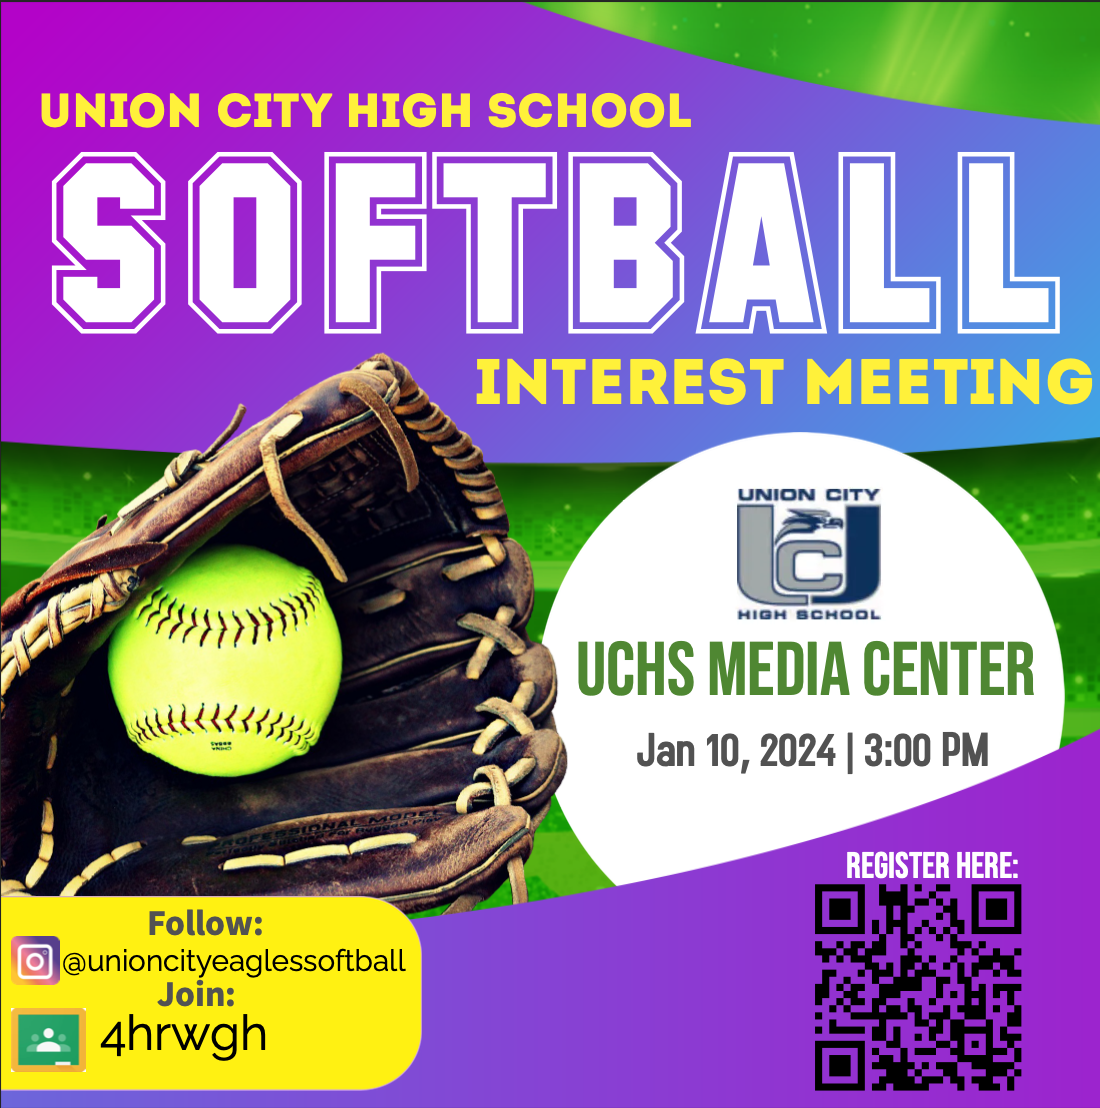 Softball Interest Meeting at Union City High School